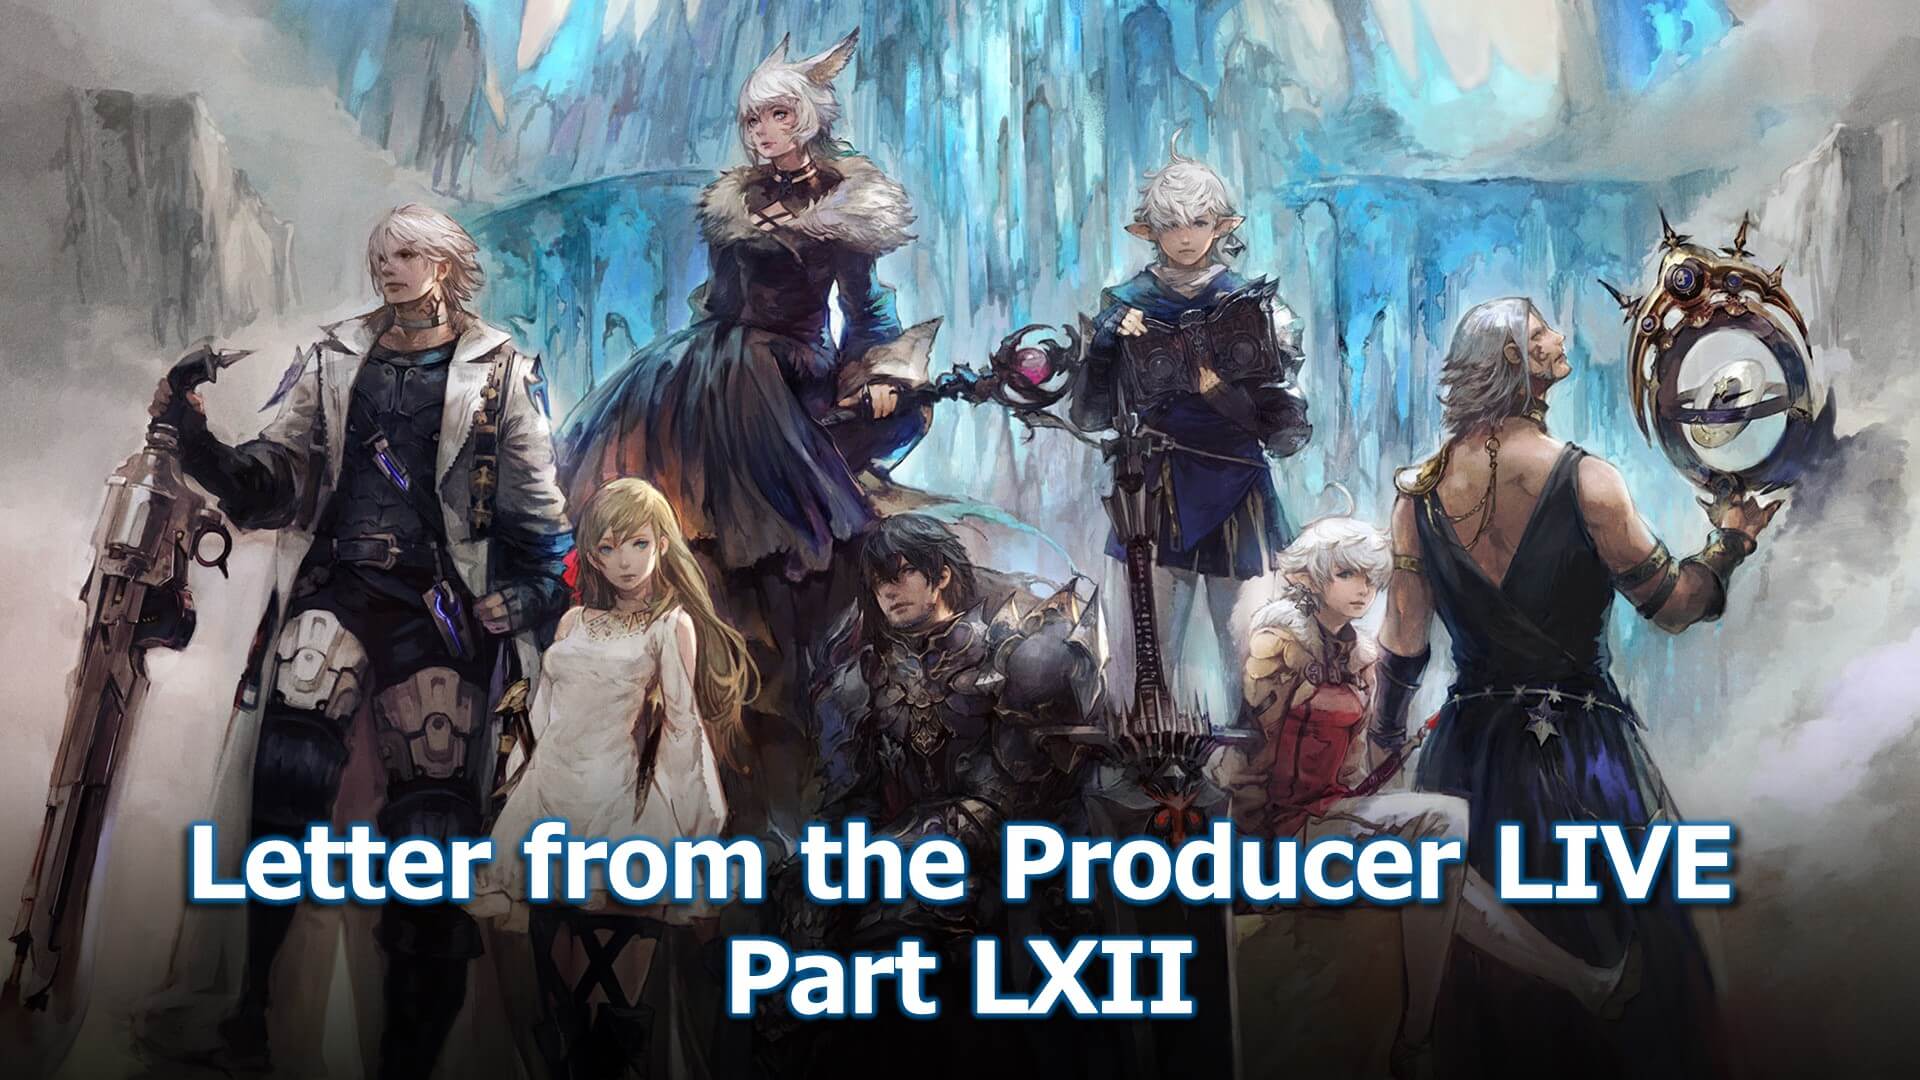 Final Fantasy XIV Update 5.5